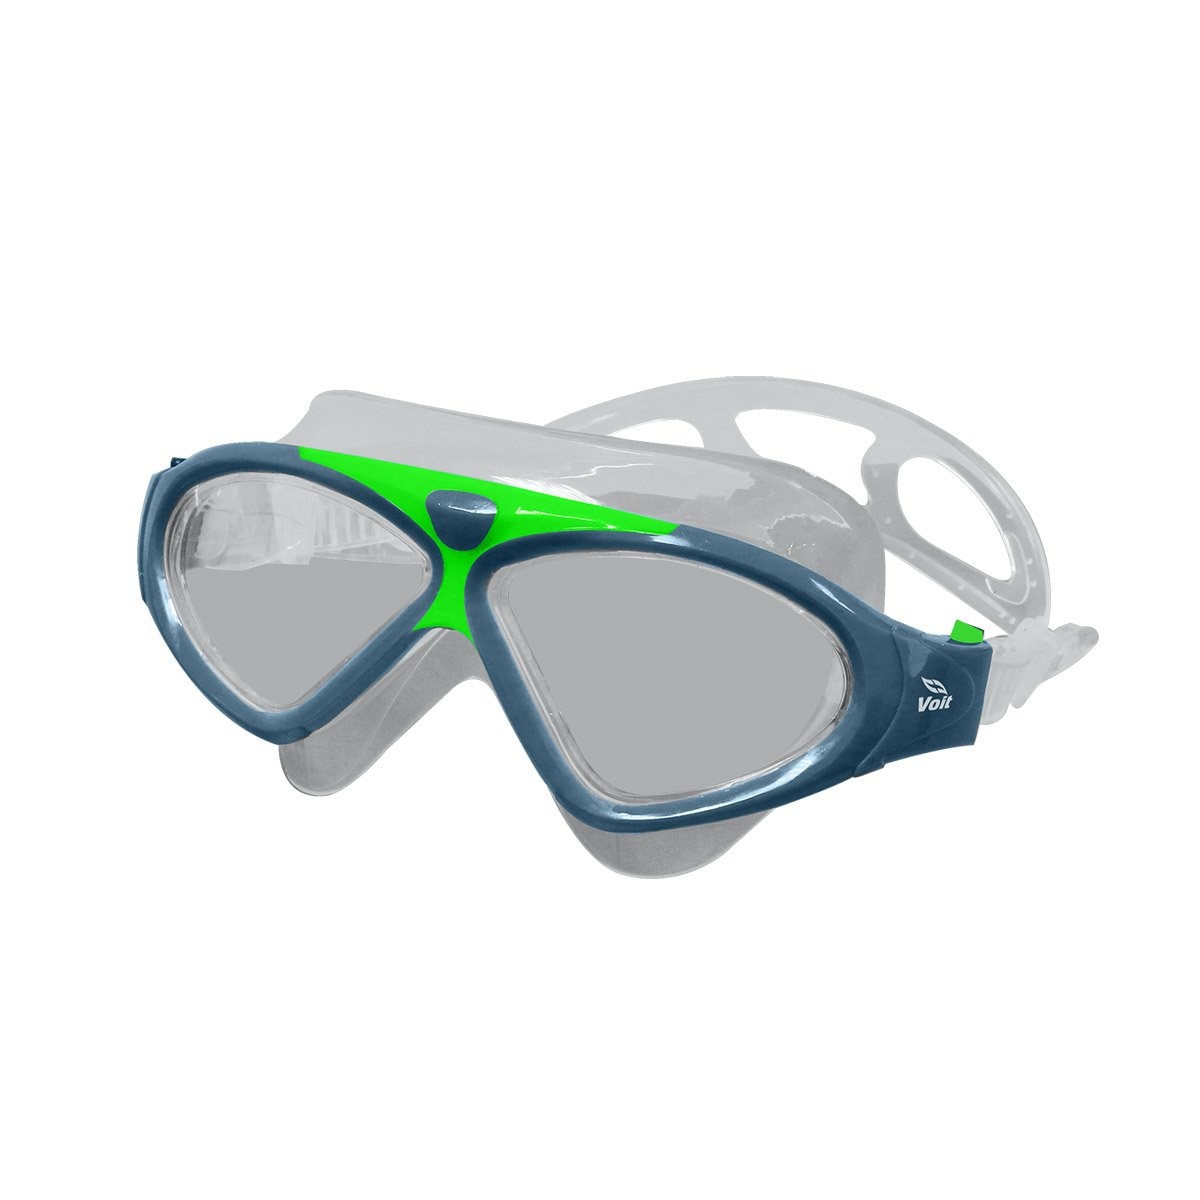 Goggles Ultra Verdes Voit